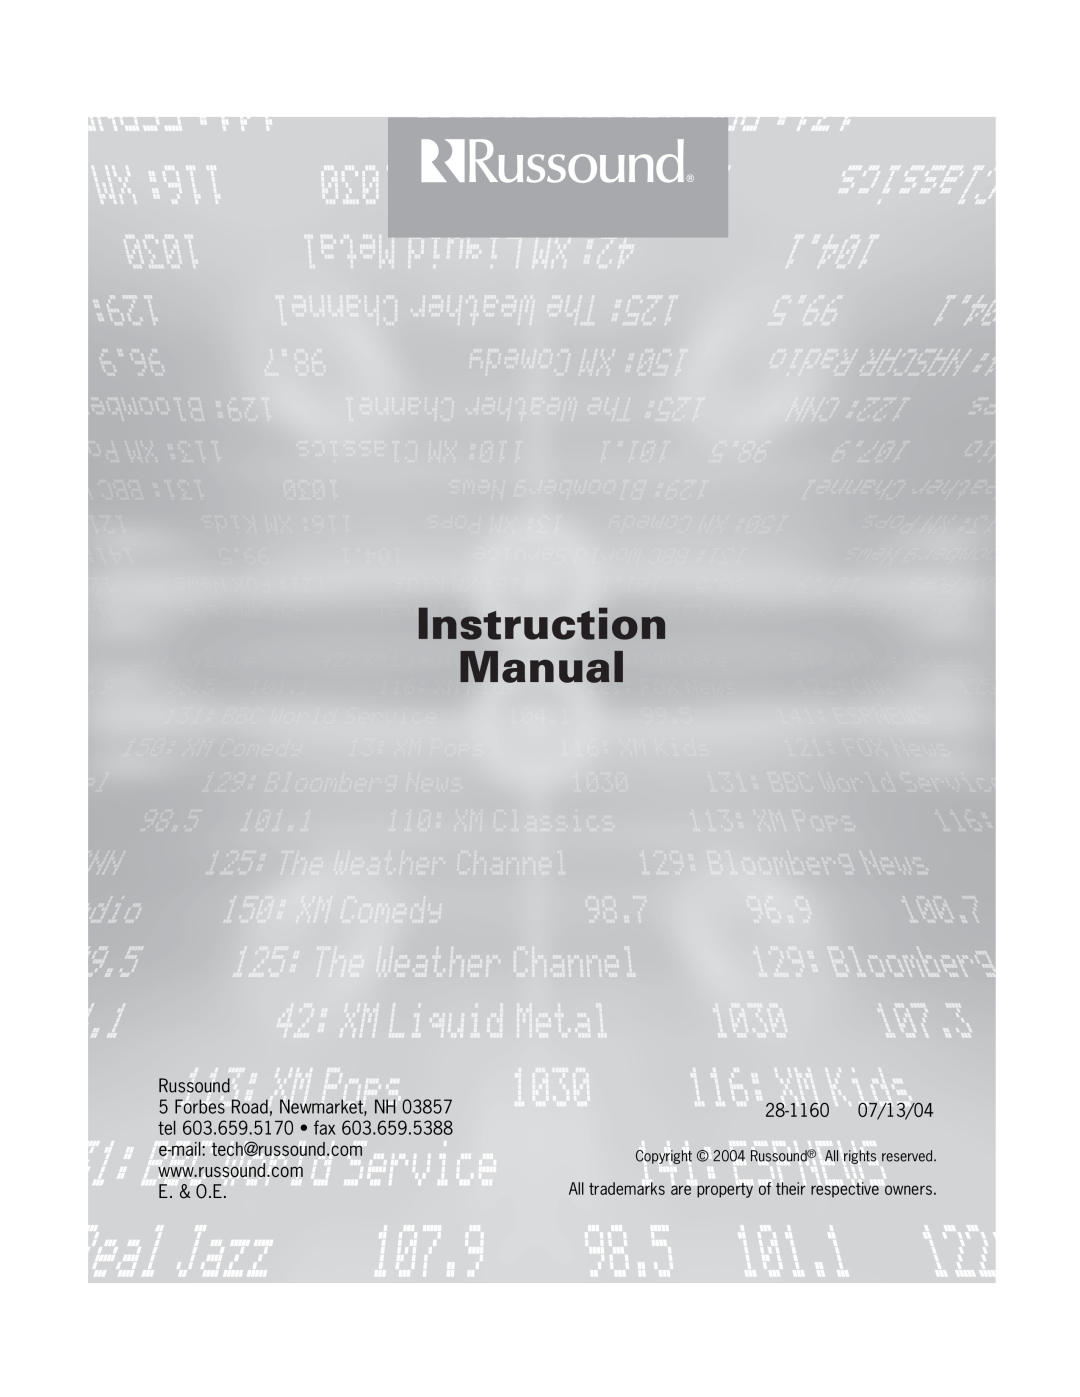 Russound ST2-XM manual E. & O.E, 28-116007/13/04, Copyright 2004 Russound All rights reserved 